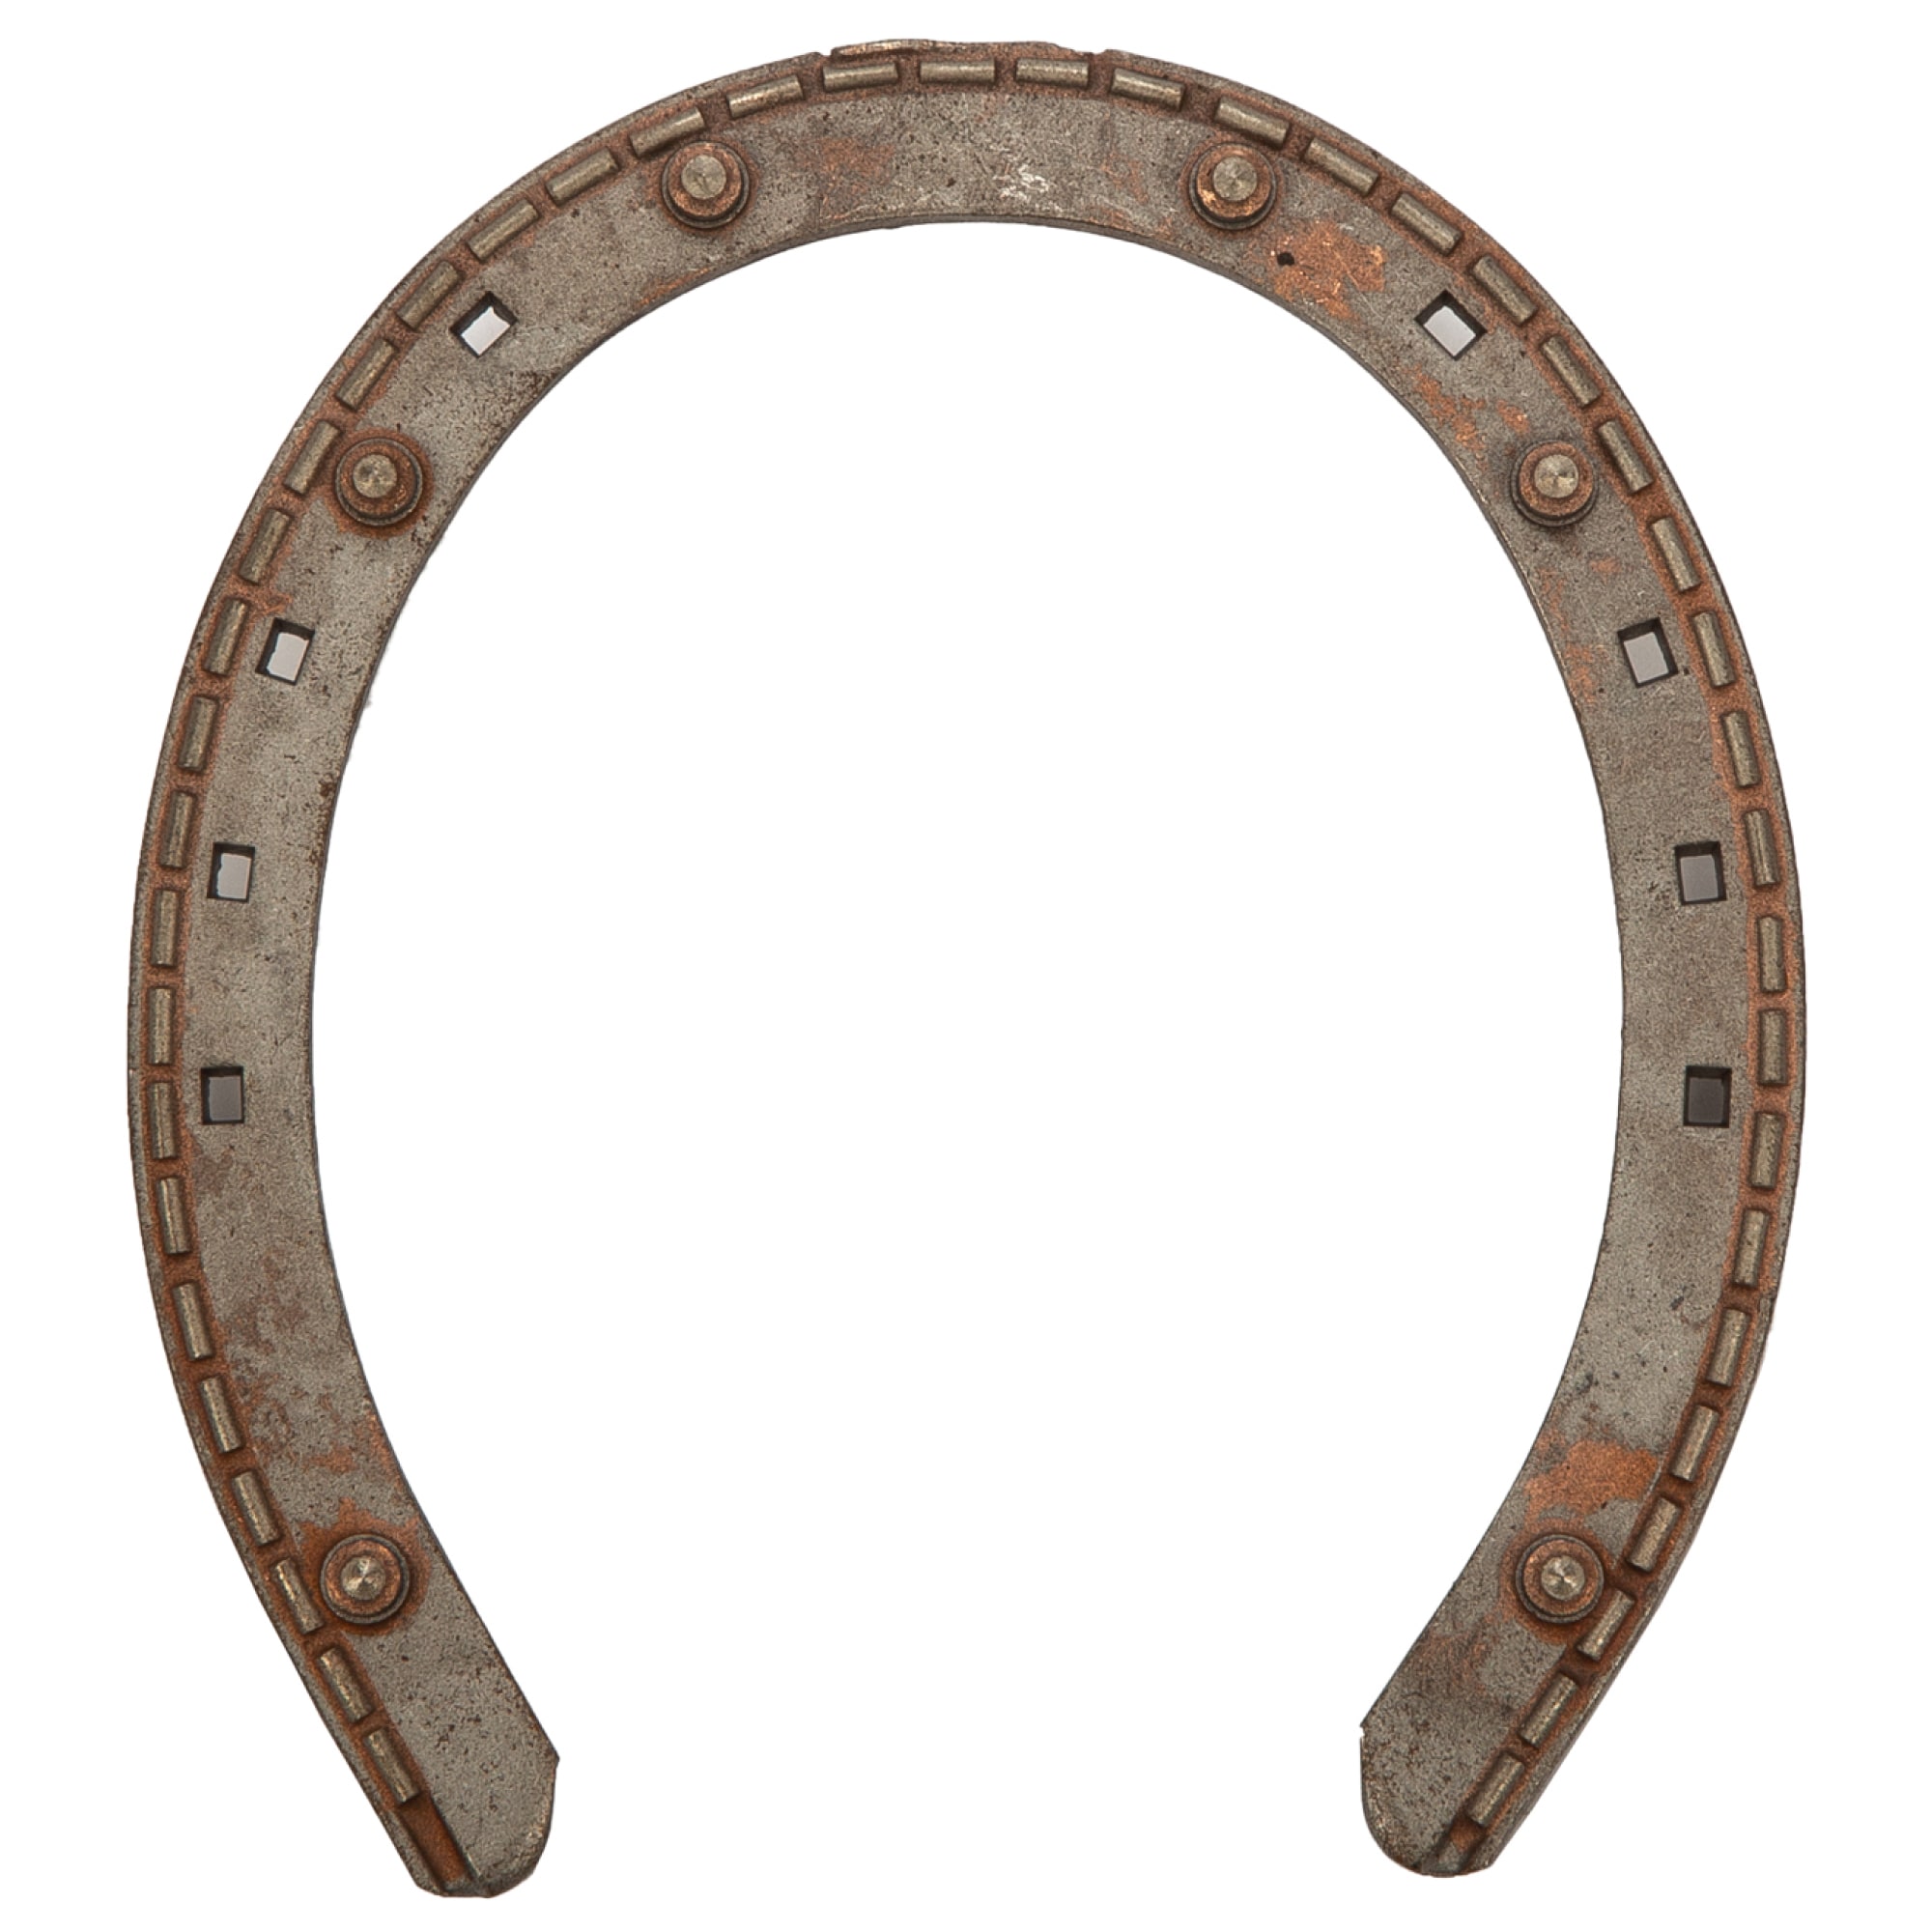 Hard metal horseshoe (goldshoe) 15x4, w/ 6 studs (4mm)